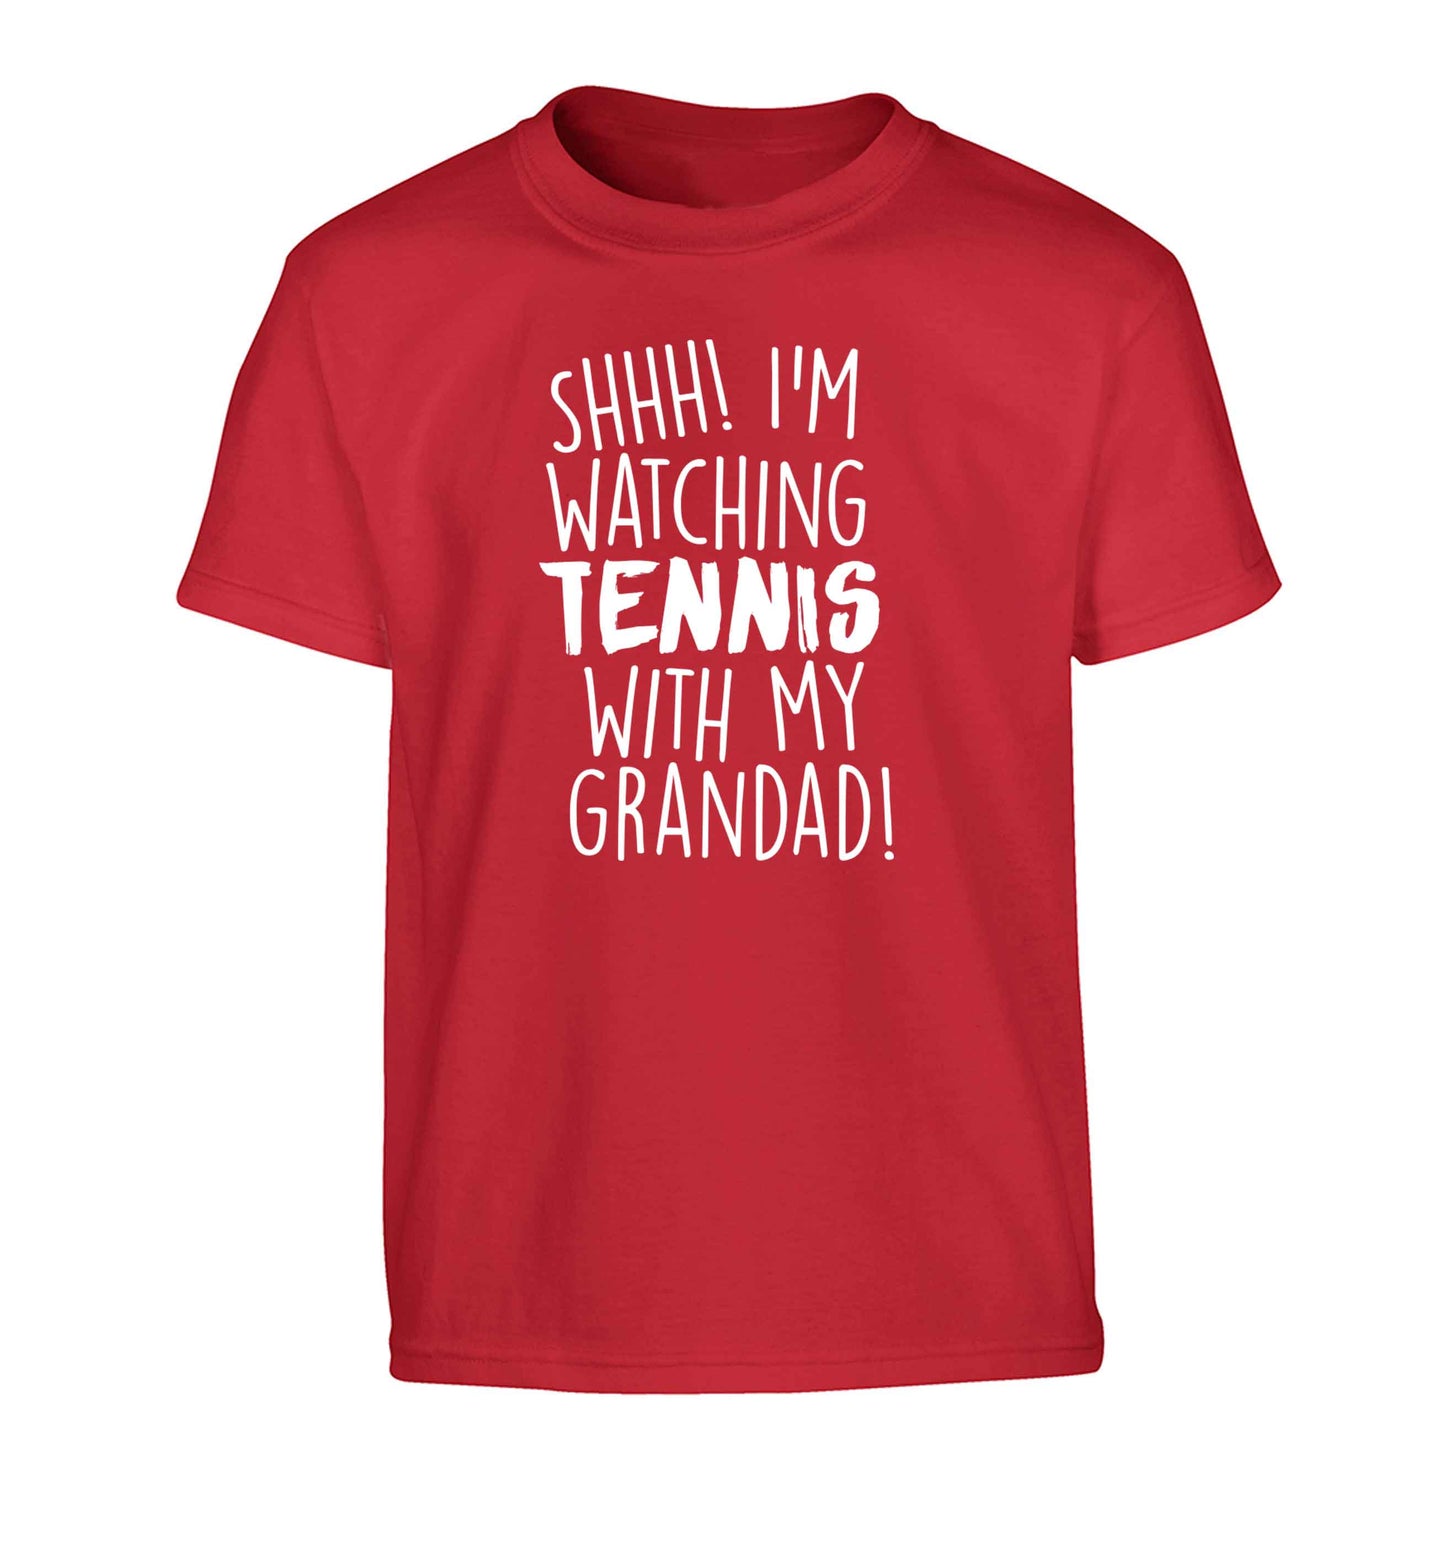 Shh! I'm watching tennis with my grandad! Children's red Tshirt 12-13 Years